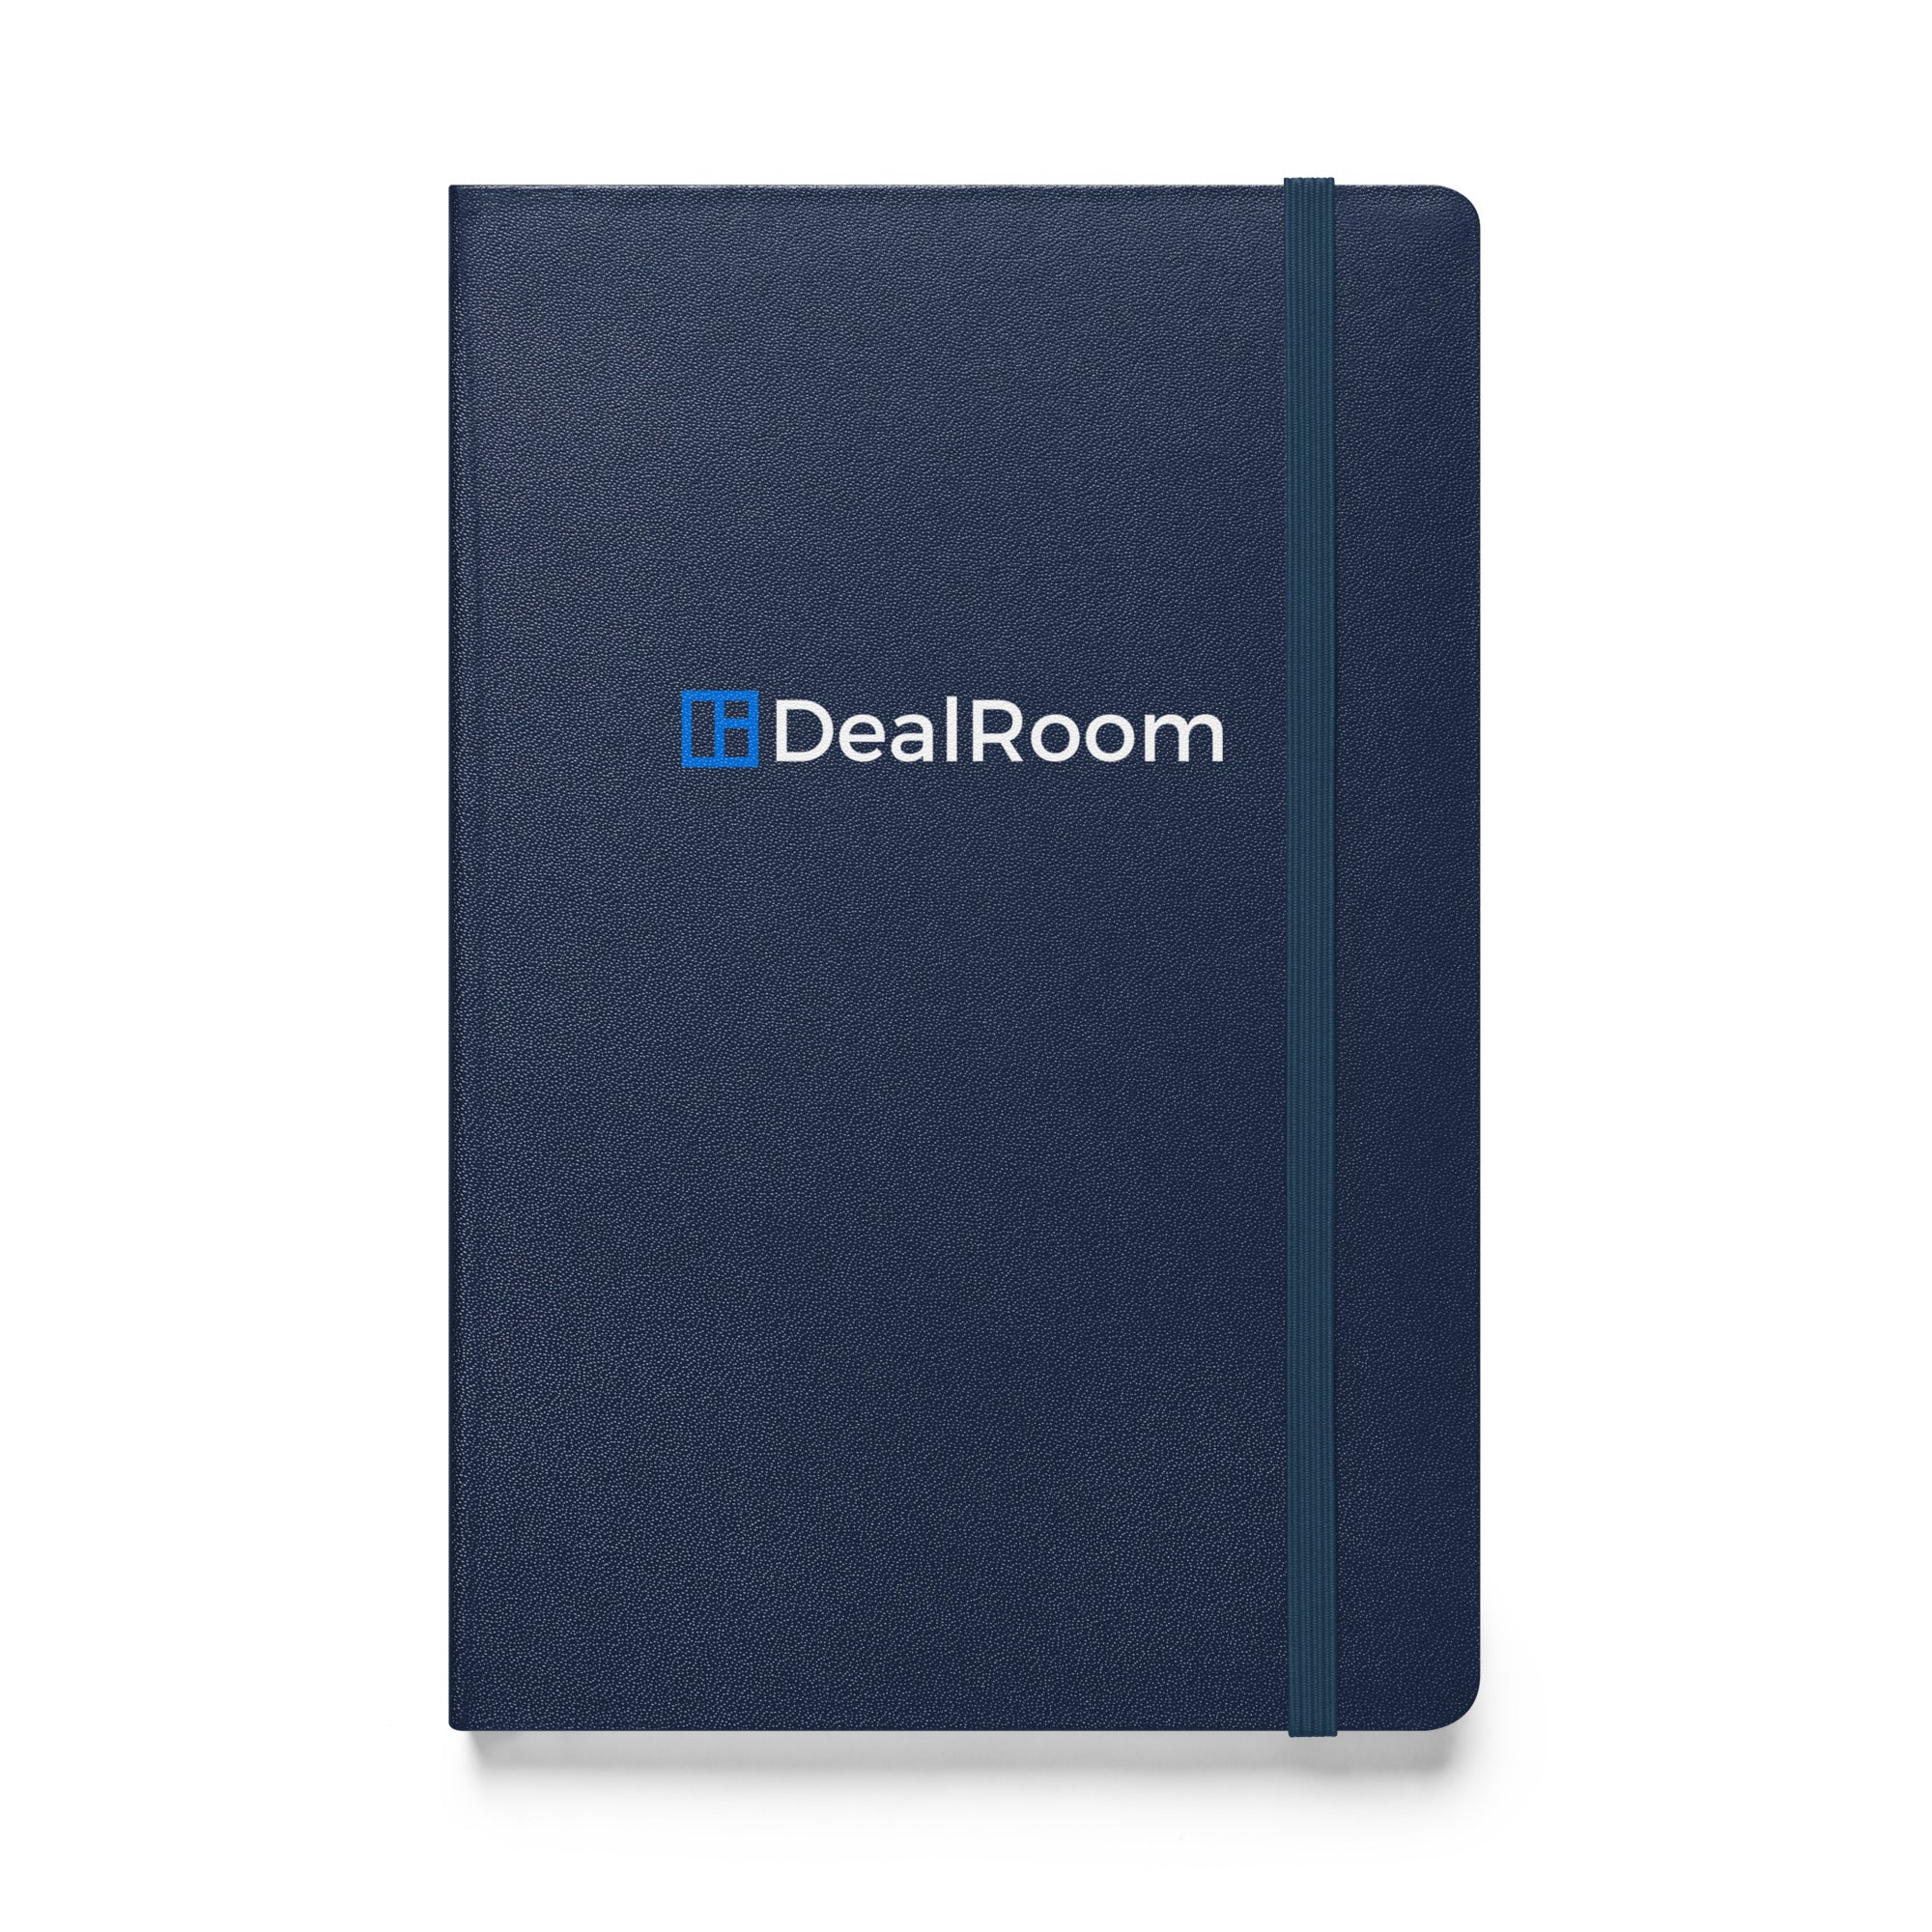 DealRoom Hardcover bound notebook